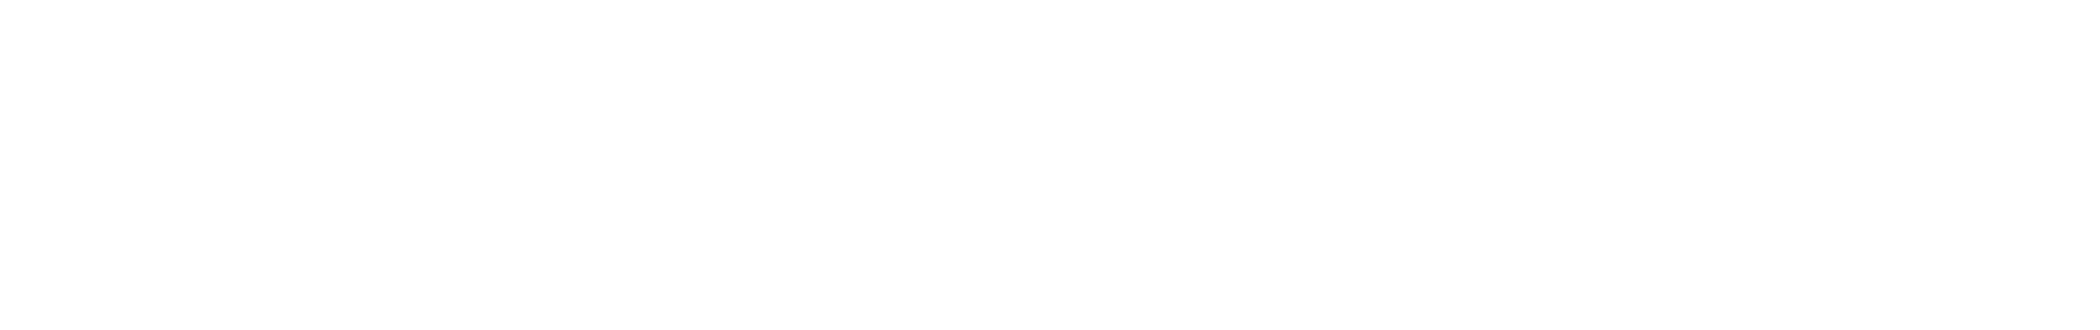 Logo HUSM